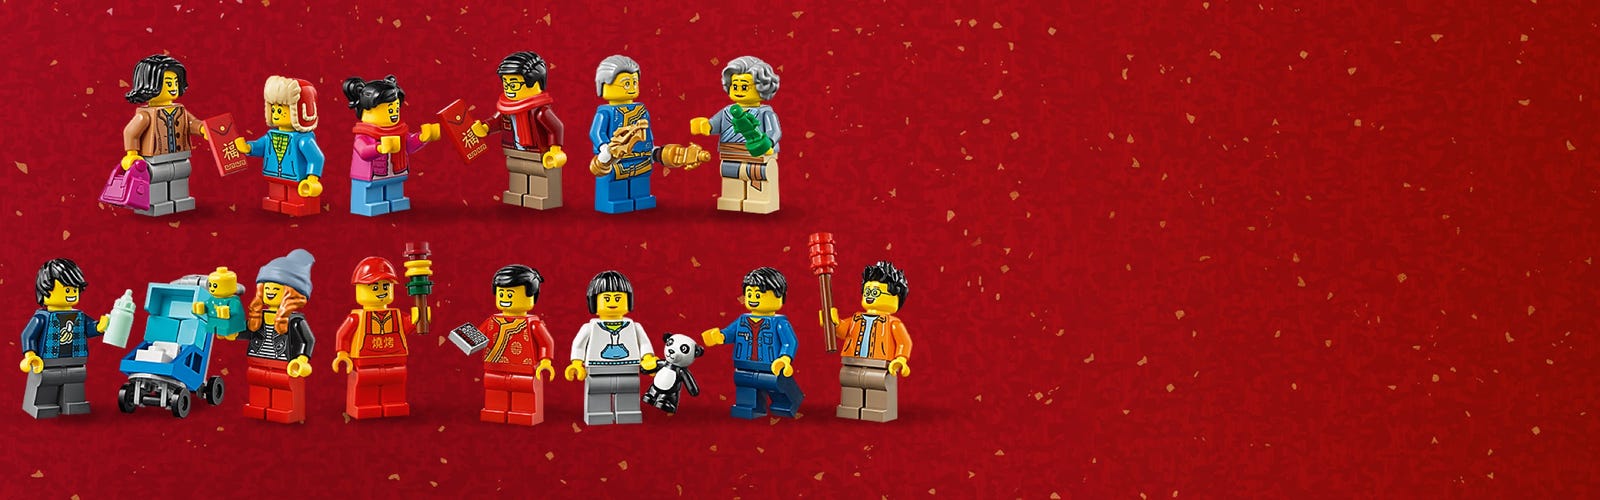 80105 - La fête du Nouvel An Chinois / Chinese New Year Temple Fair - Ma  collection de LEGO